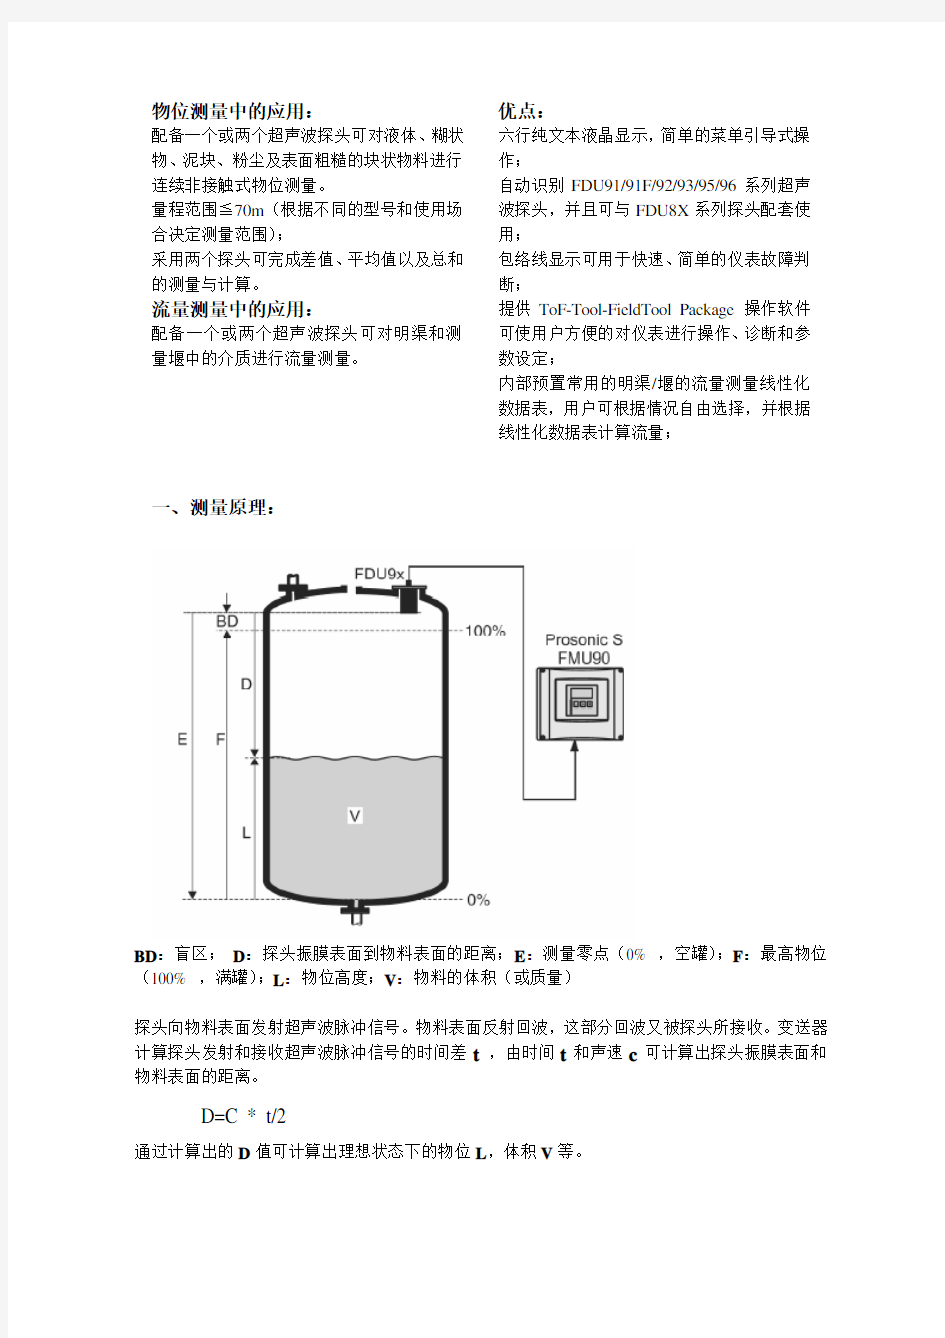 FMU90中文操作手册